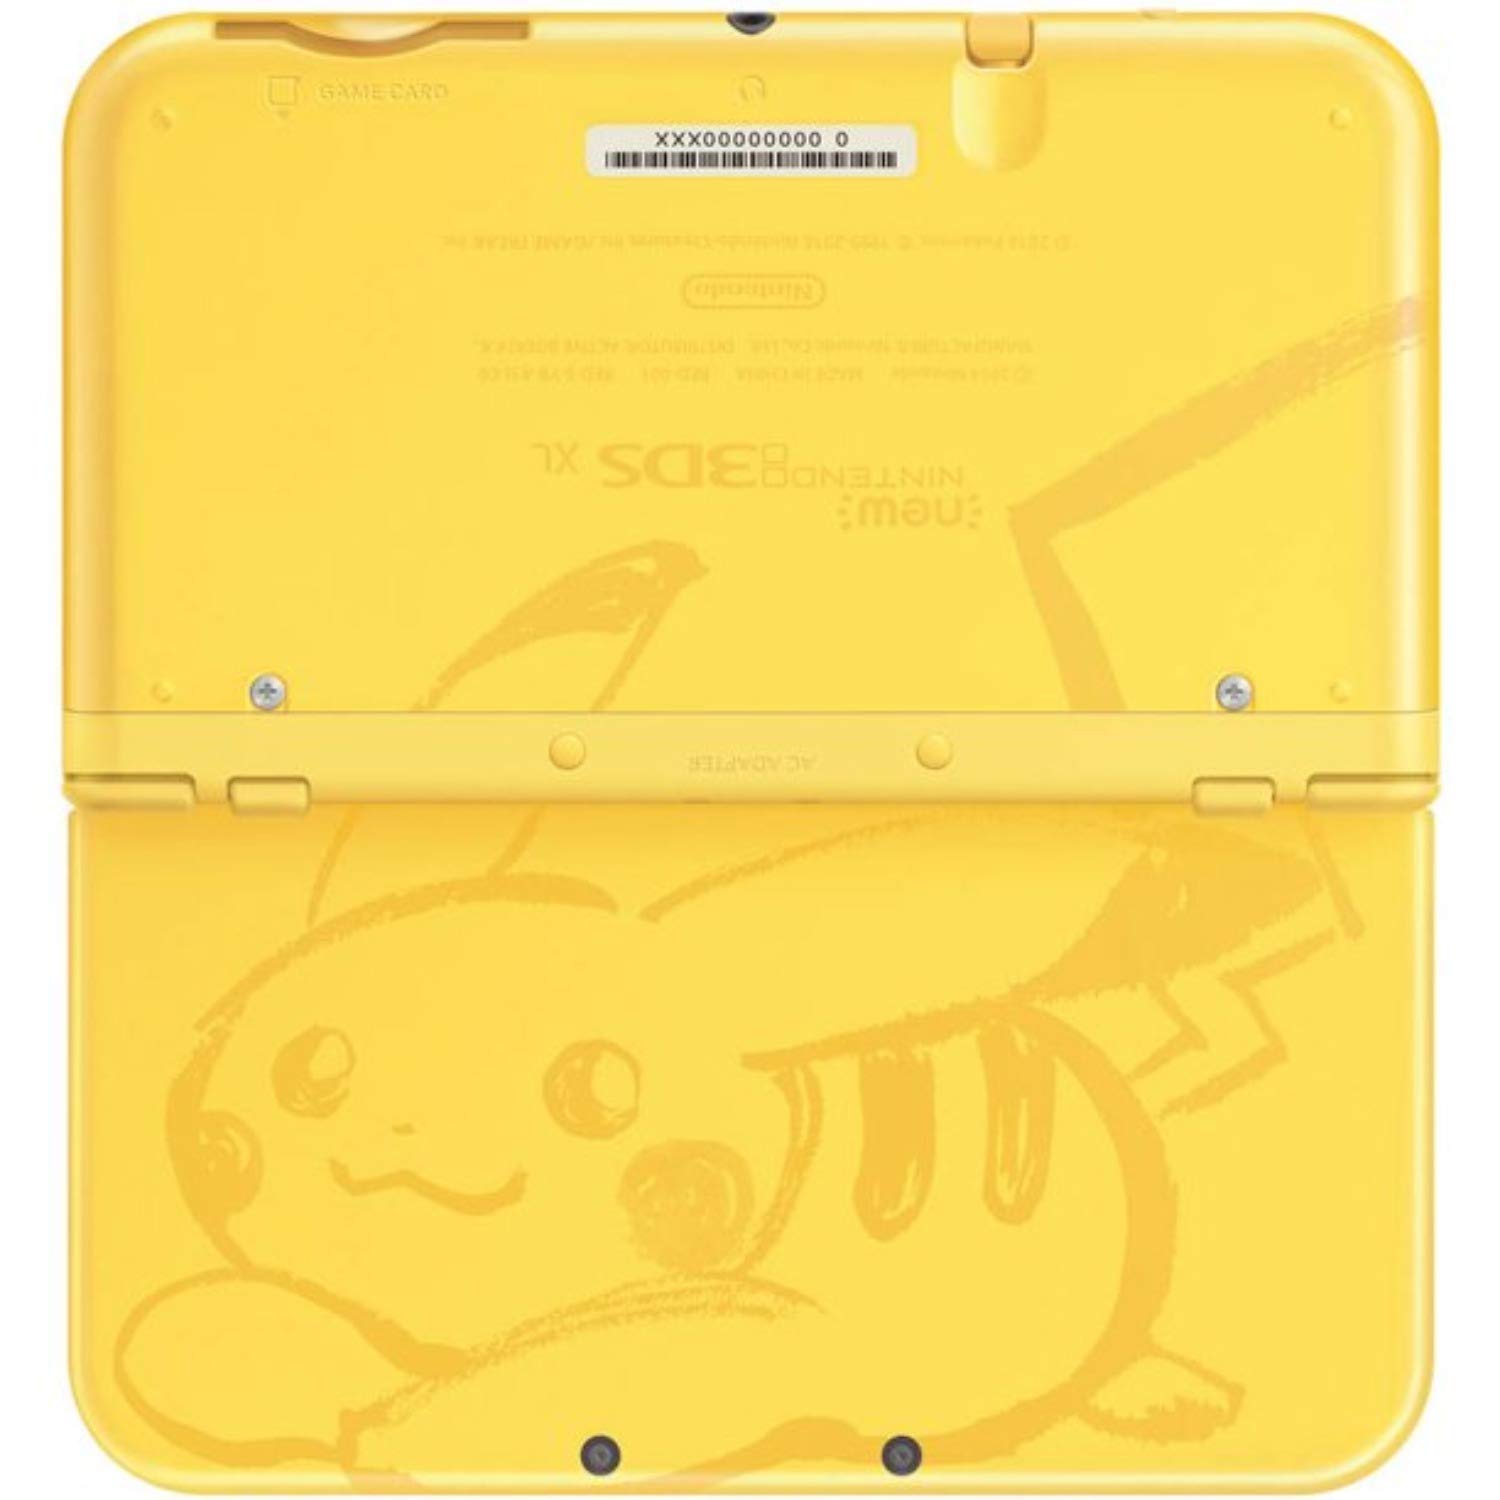 Nintendo Pikachu Yellow Edition New Nintendo 3DS XL Console